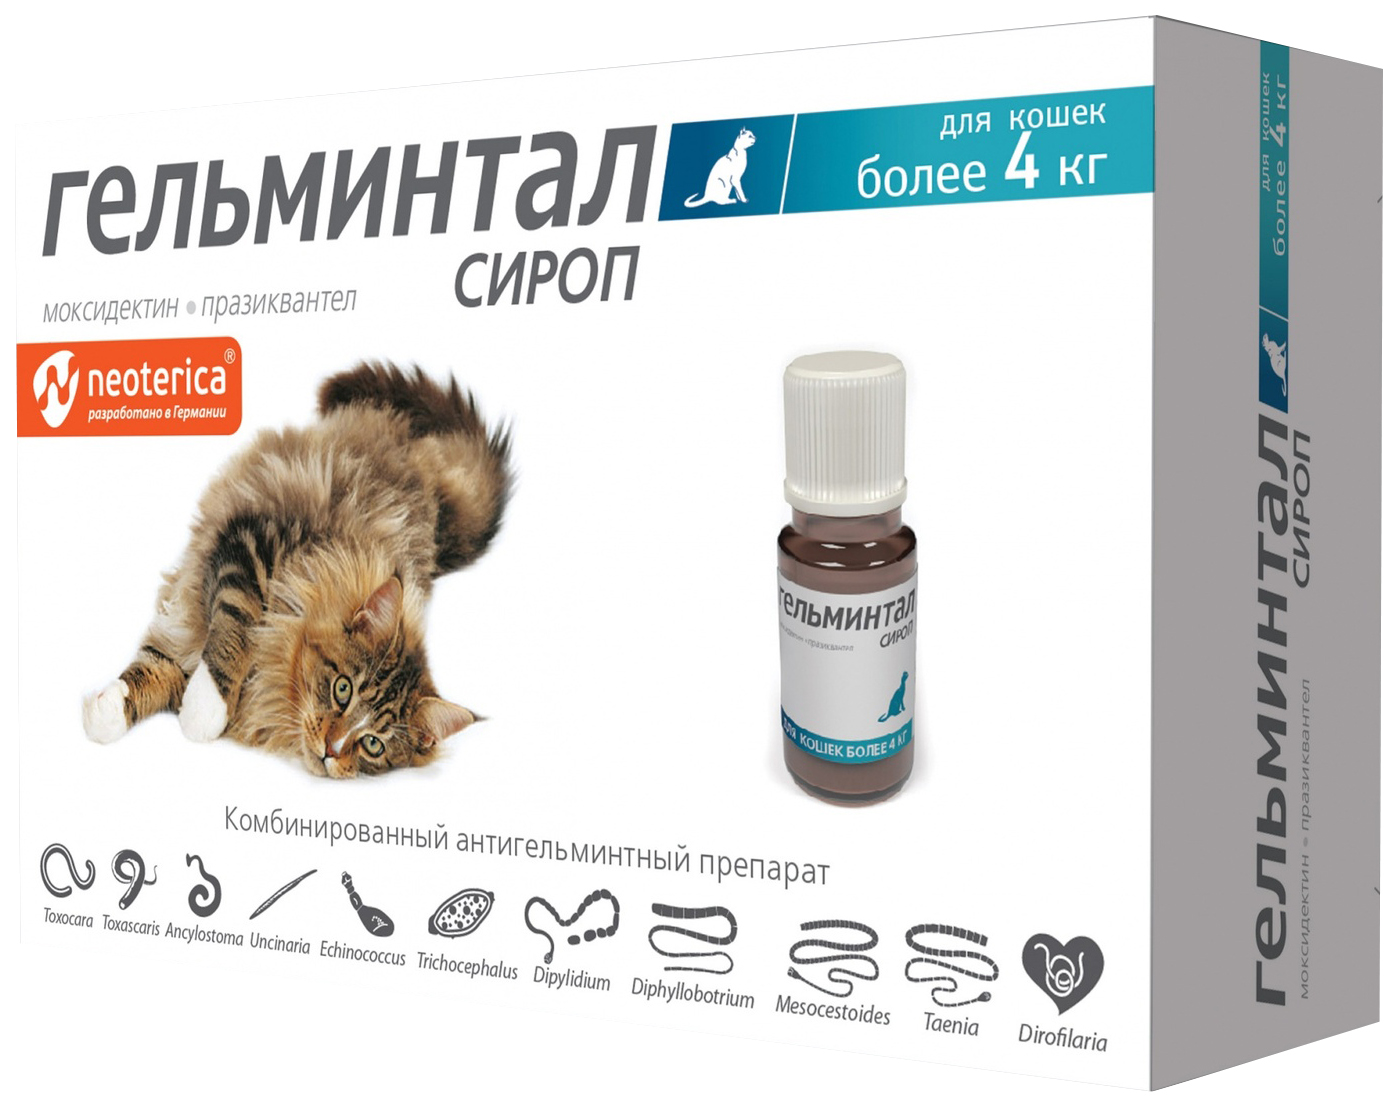 Антигельминтик Гельминтал сироп для кошек более 4 кг, флакон 5 мл